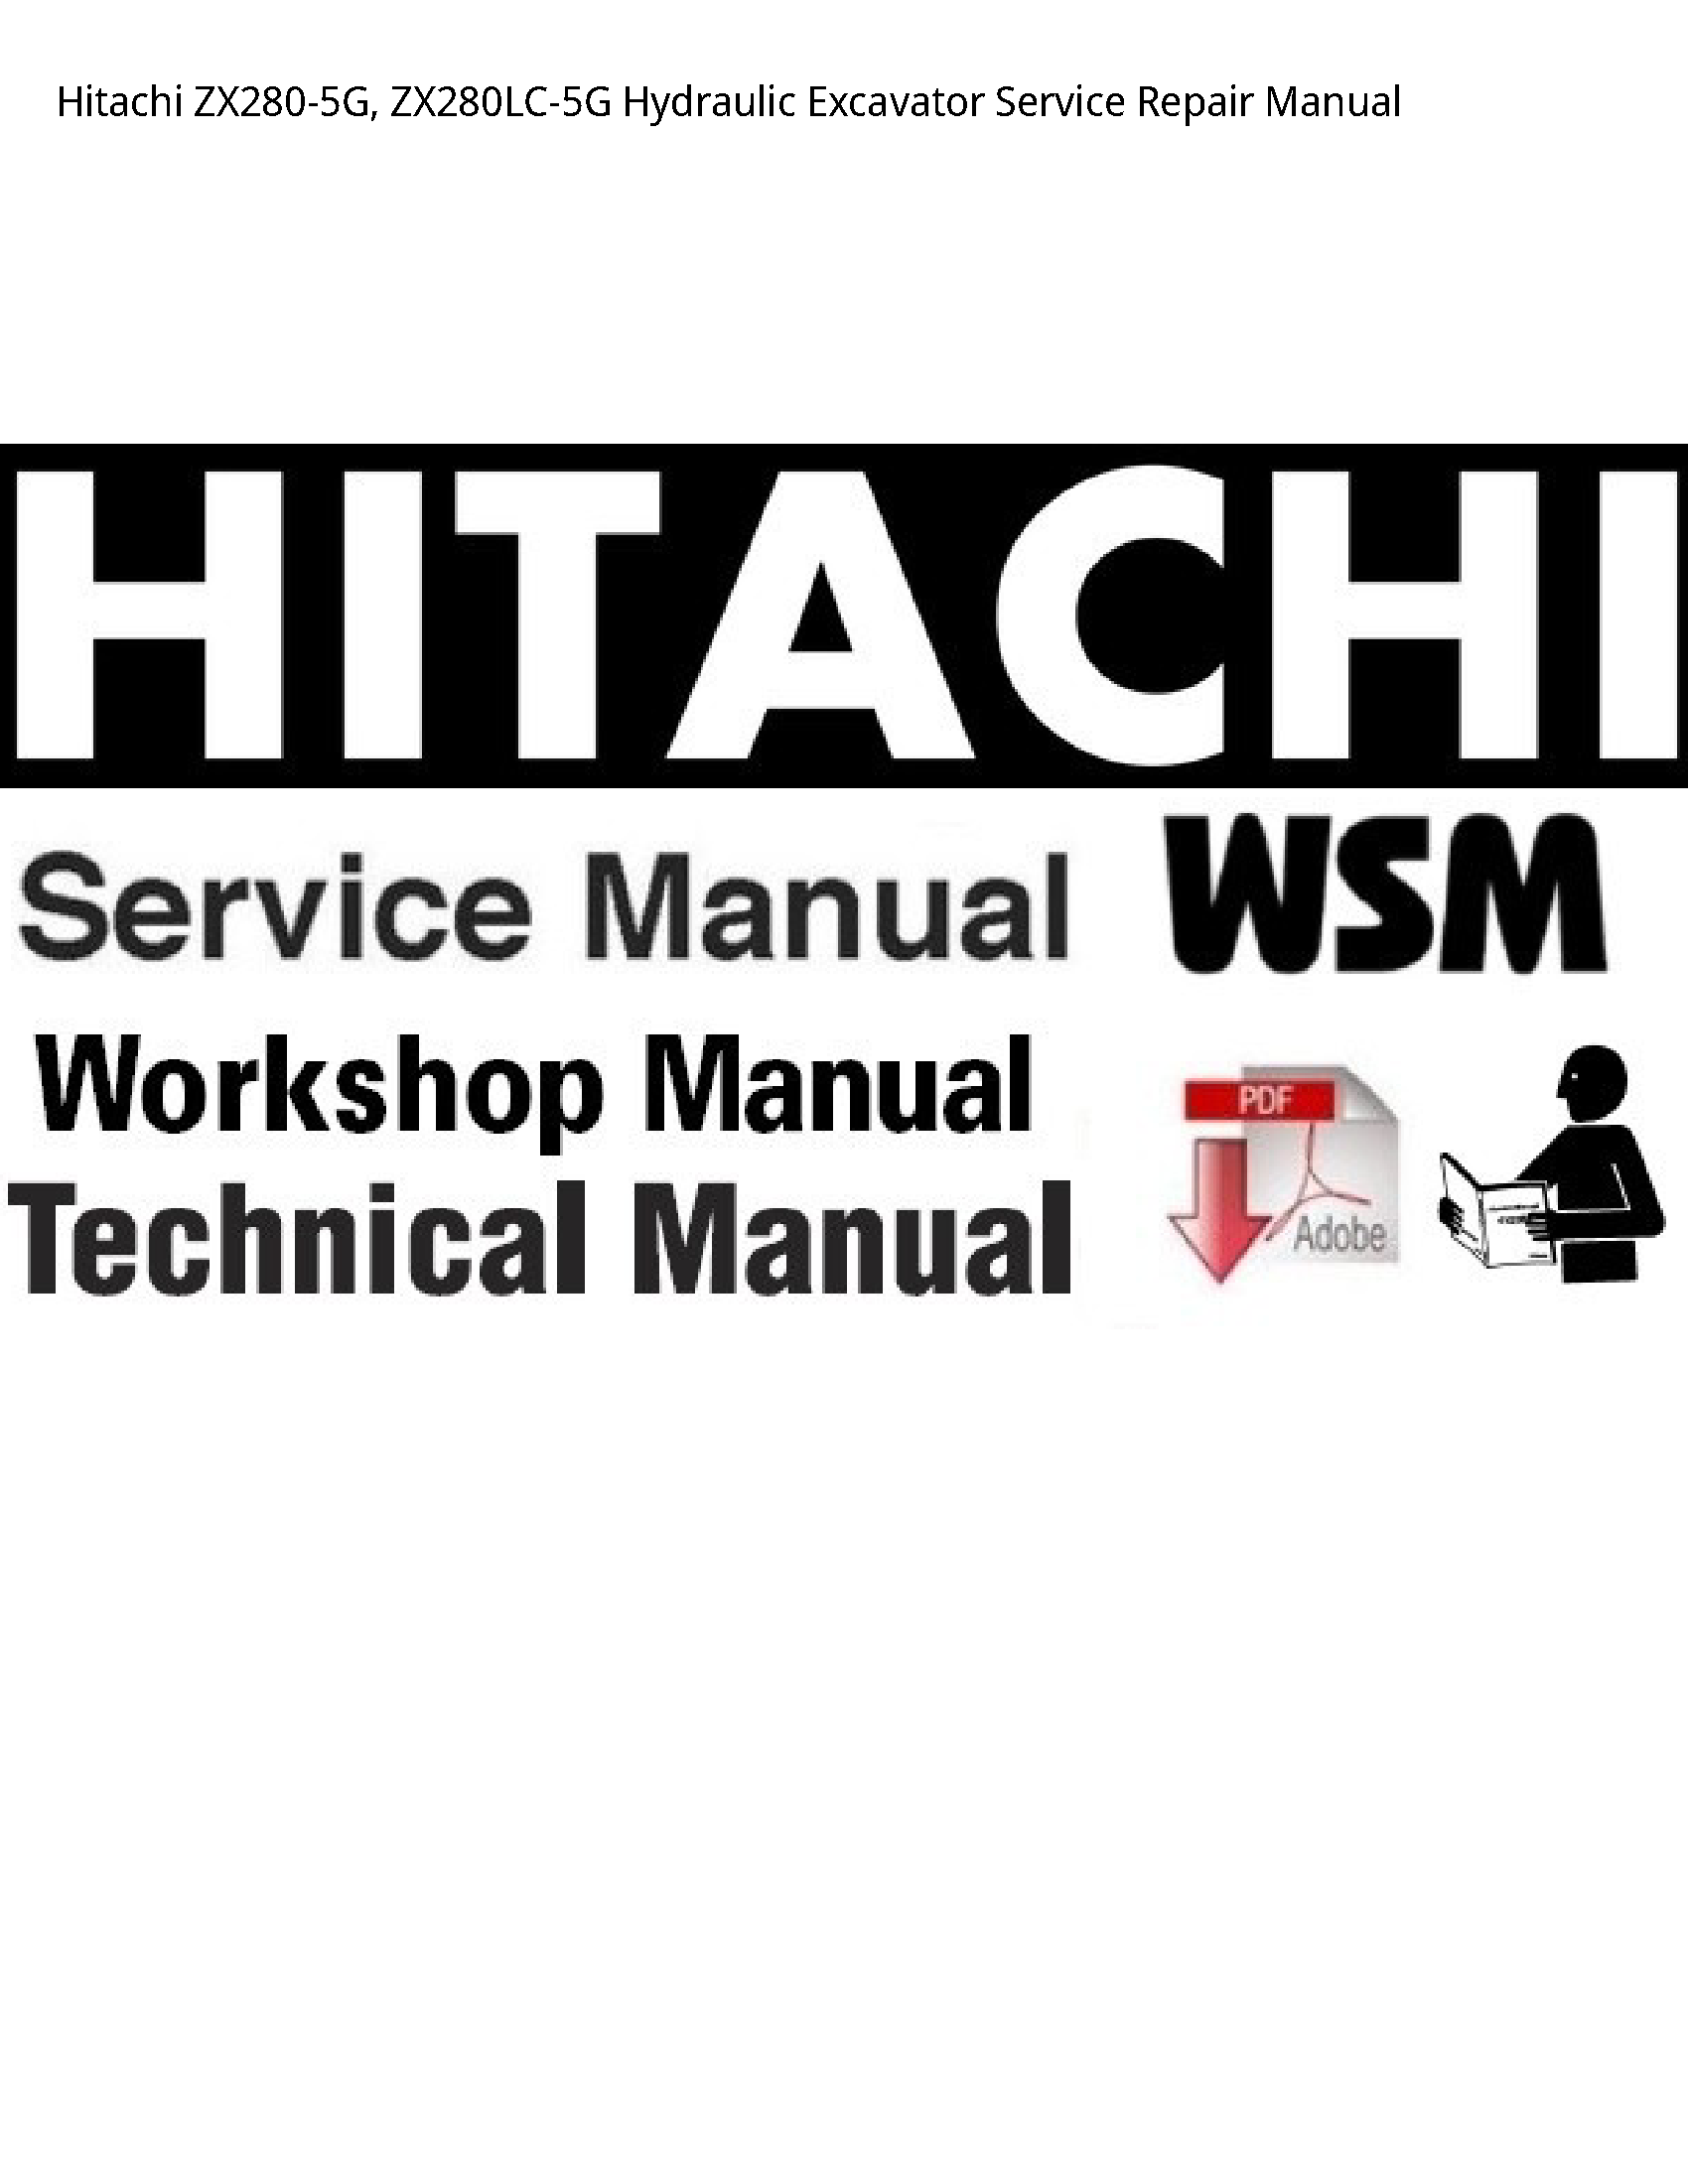 Hitachi ZX280-5G Hydraulic Excavator manual